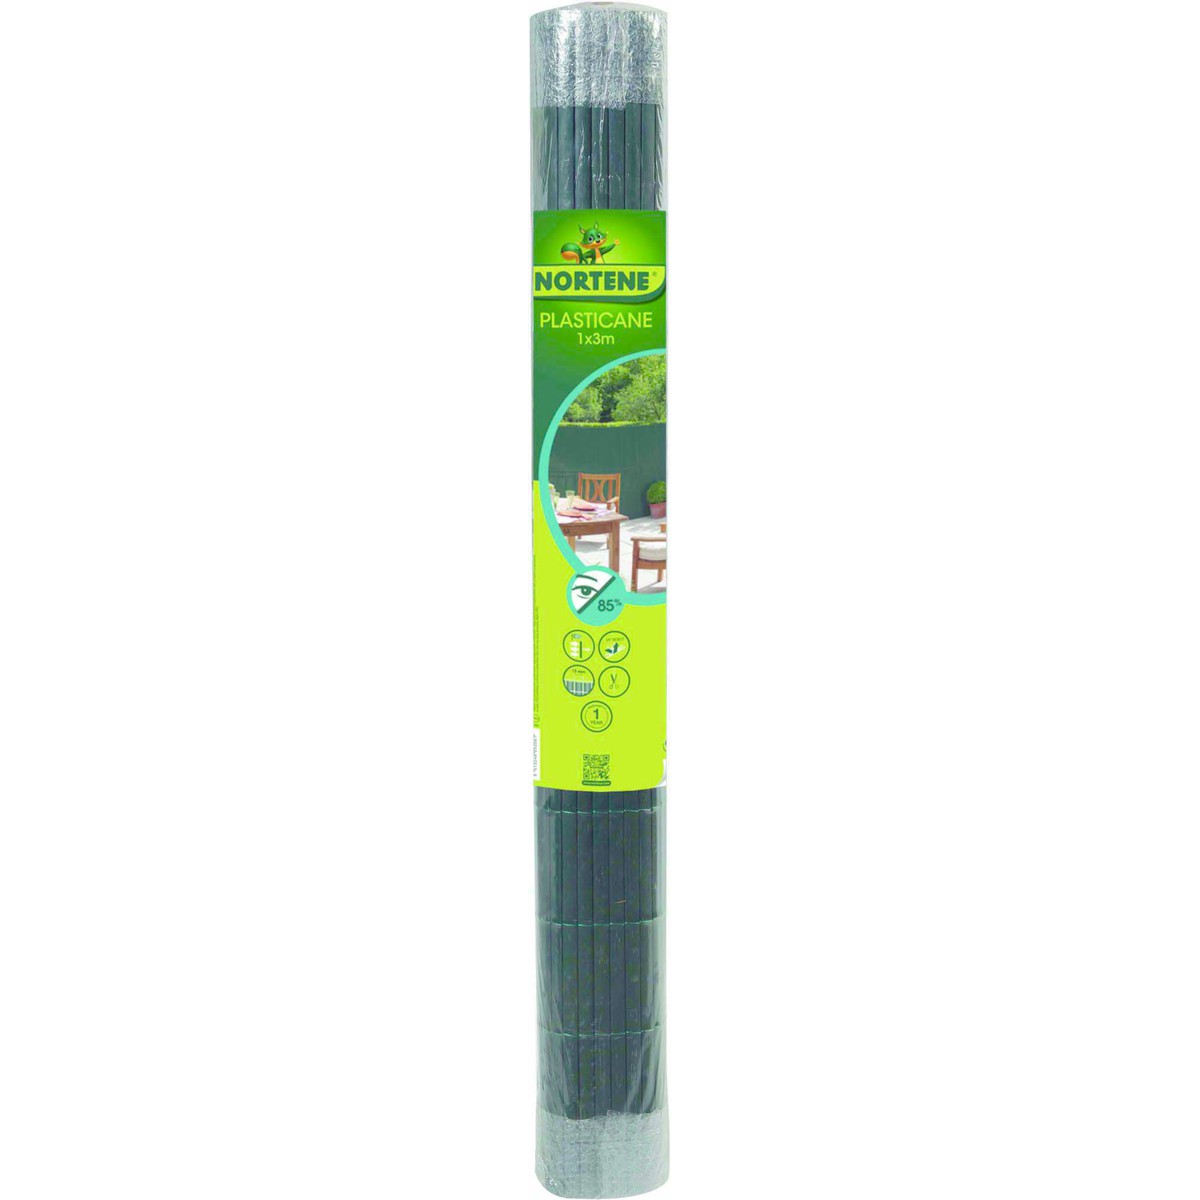 Nortene  PLASTICANE OVAL DF  Canisse PVC double face 13mm -85% Vert kaki 1x3m